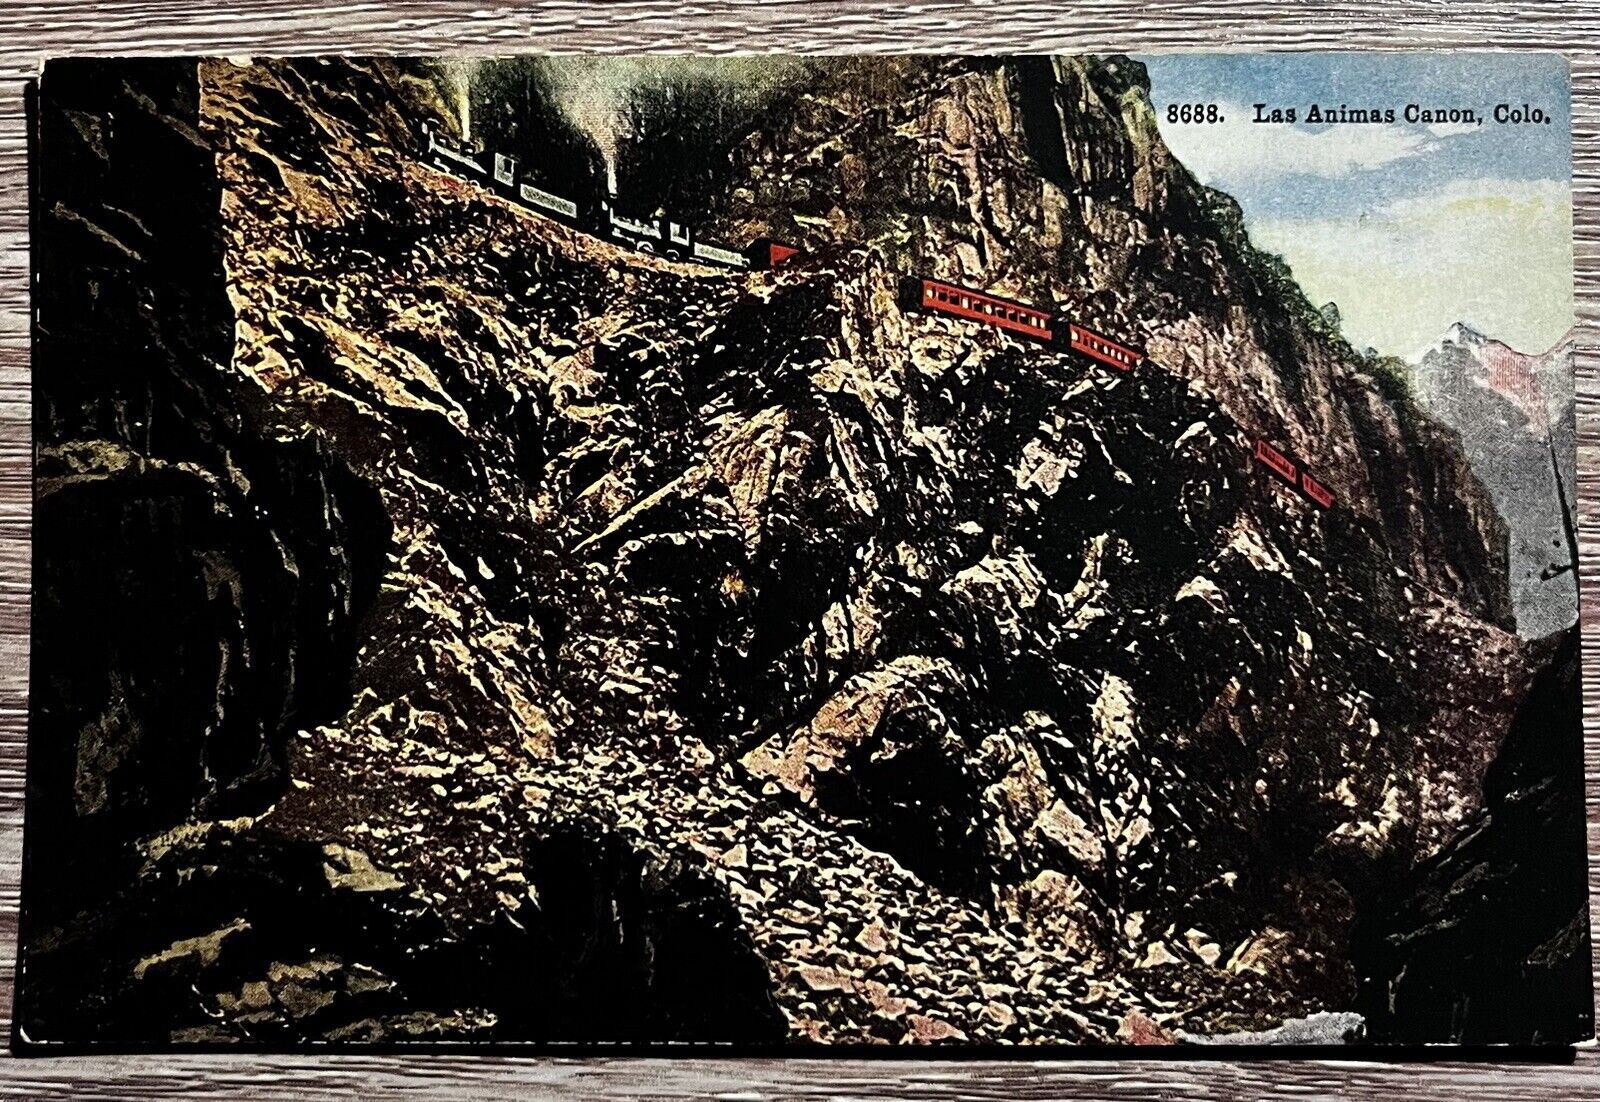 “Las Animas Canon, Colo.” Vintage Postcard 